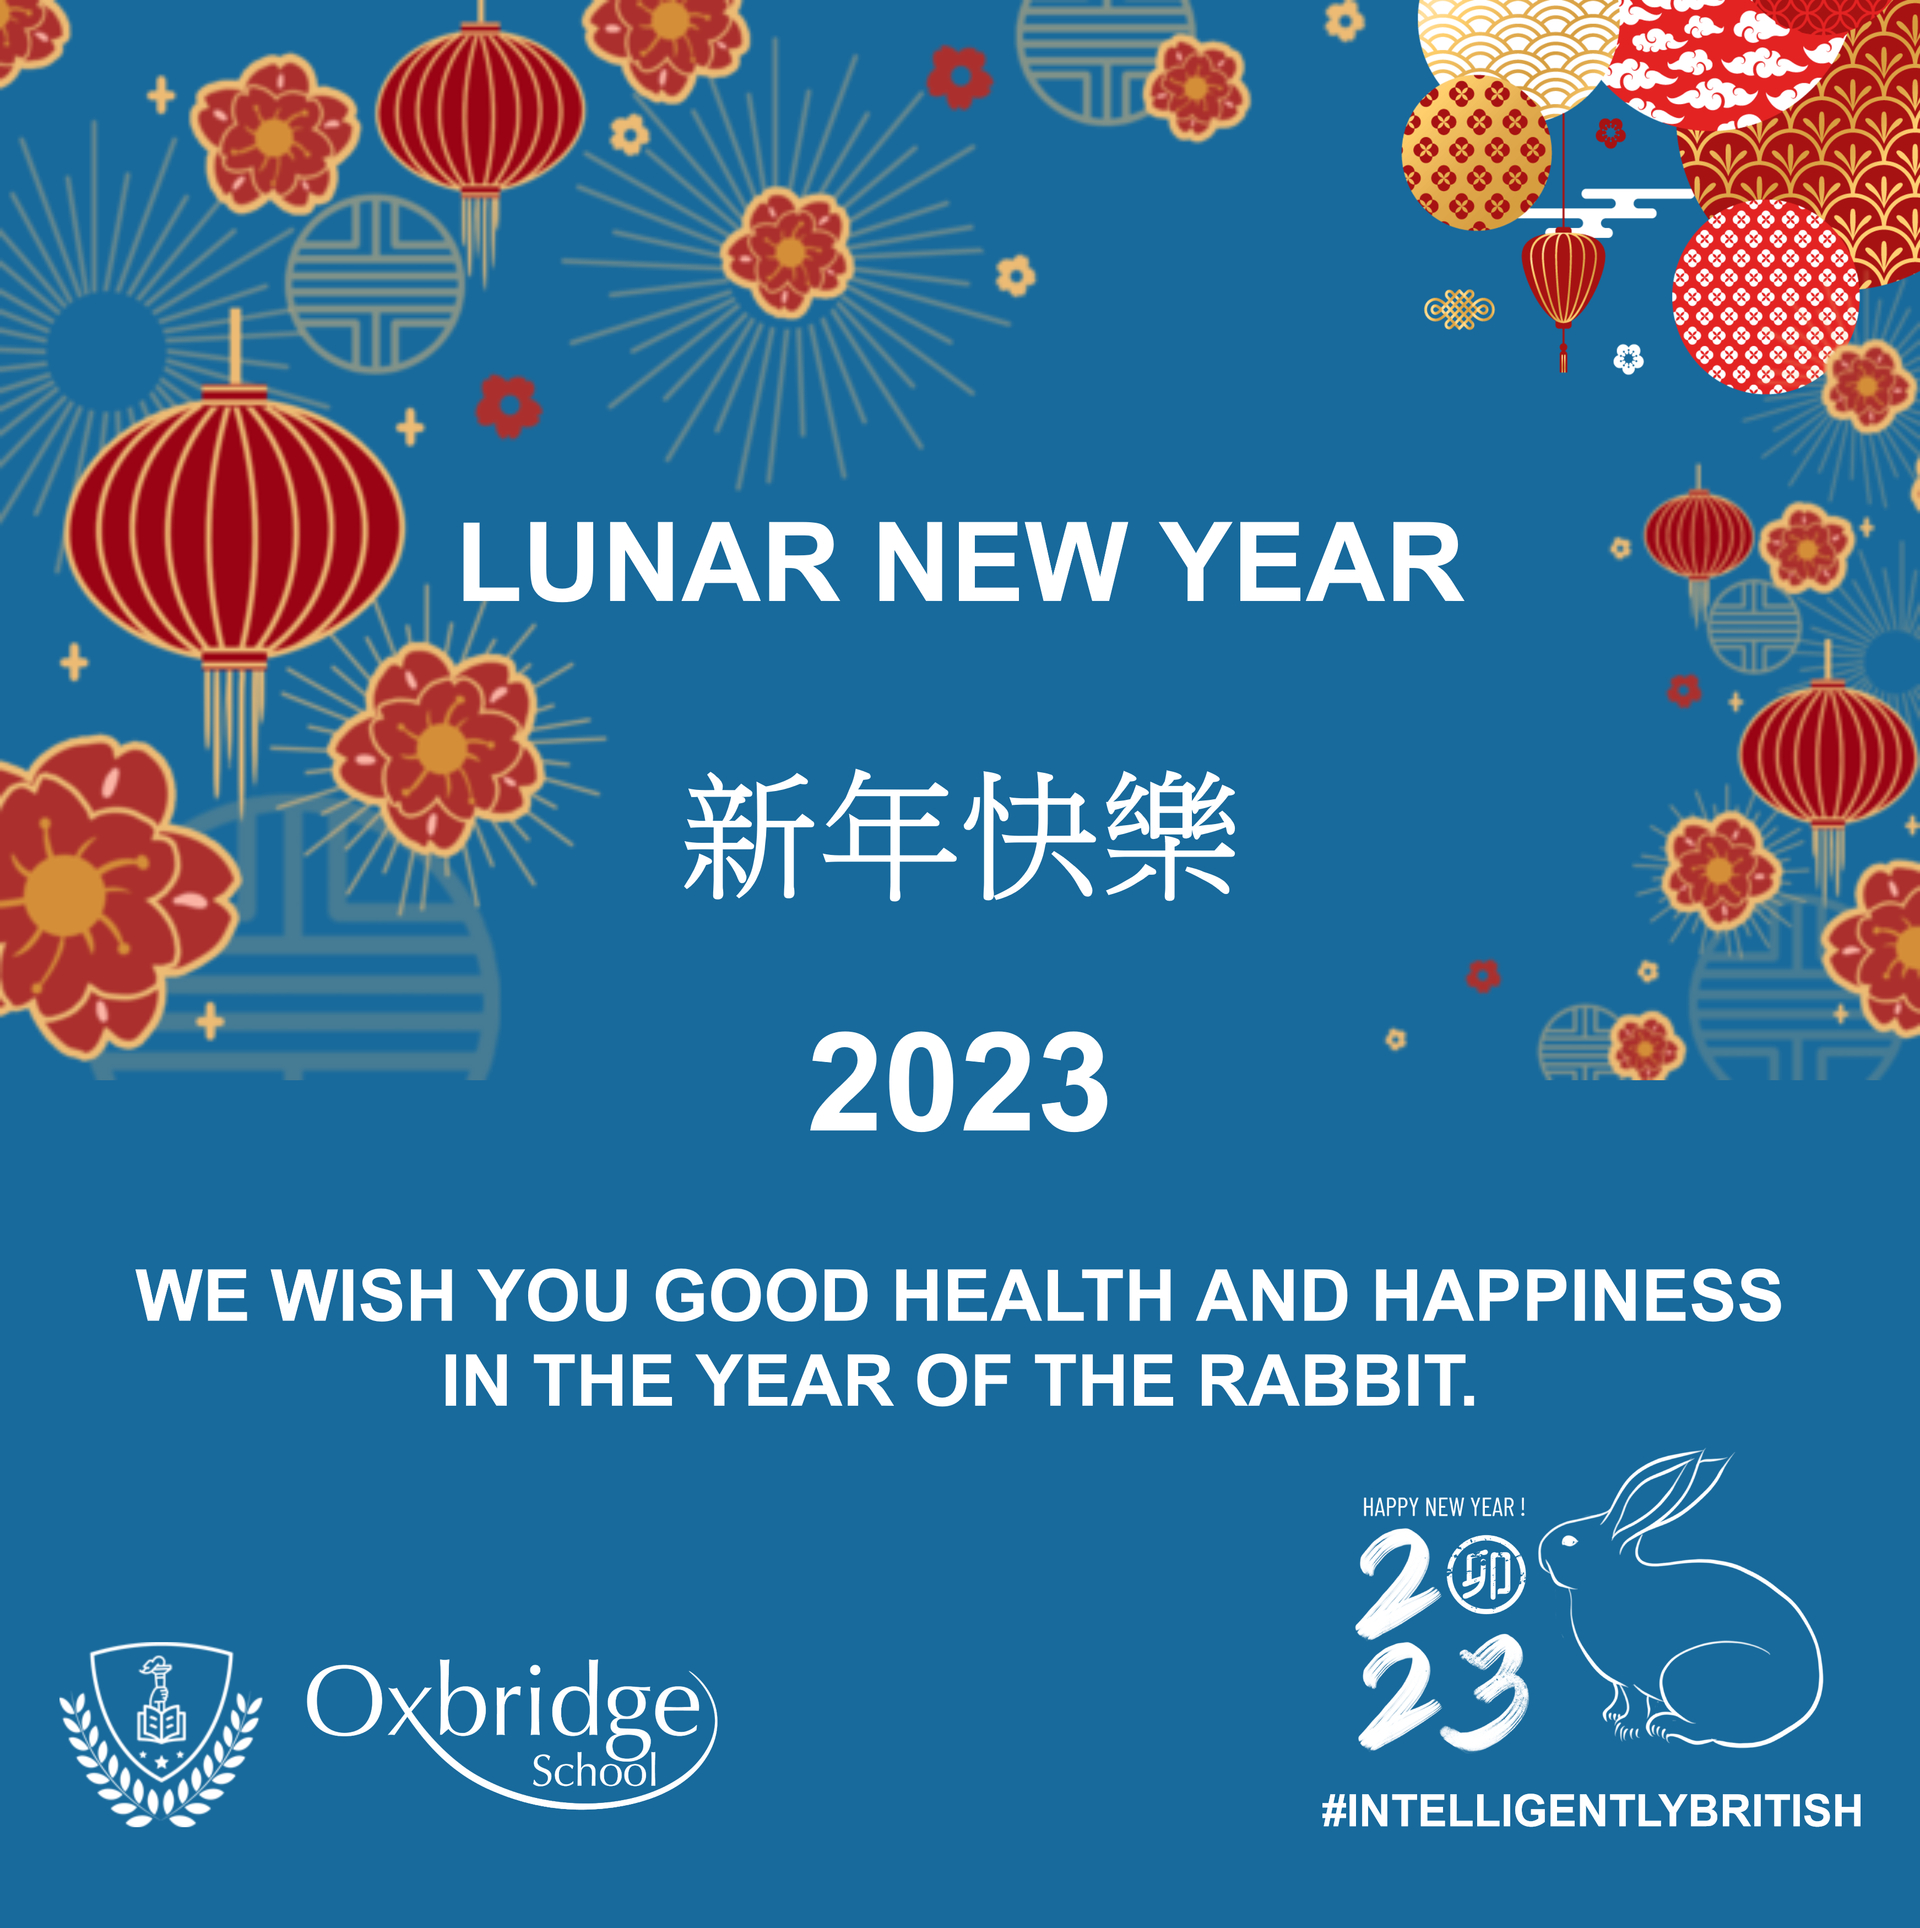 Oxbridge School Chinese New Year Greetings with Rabbit